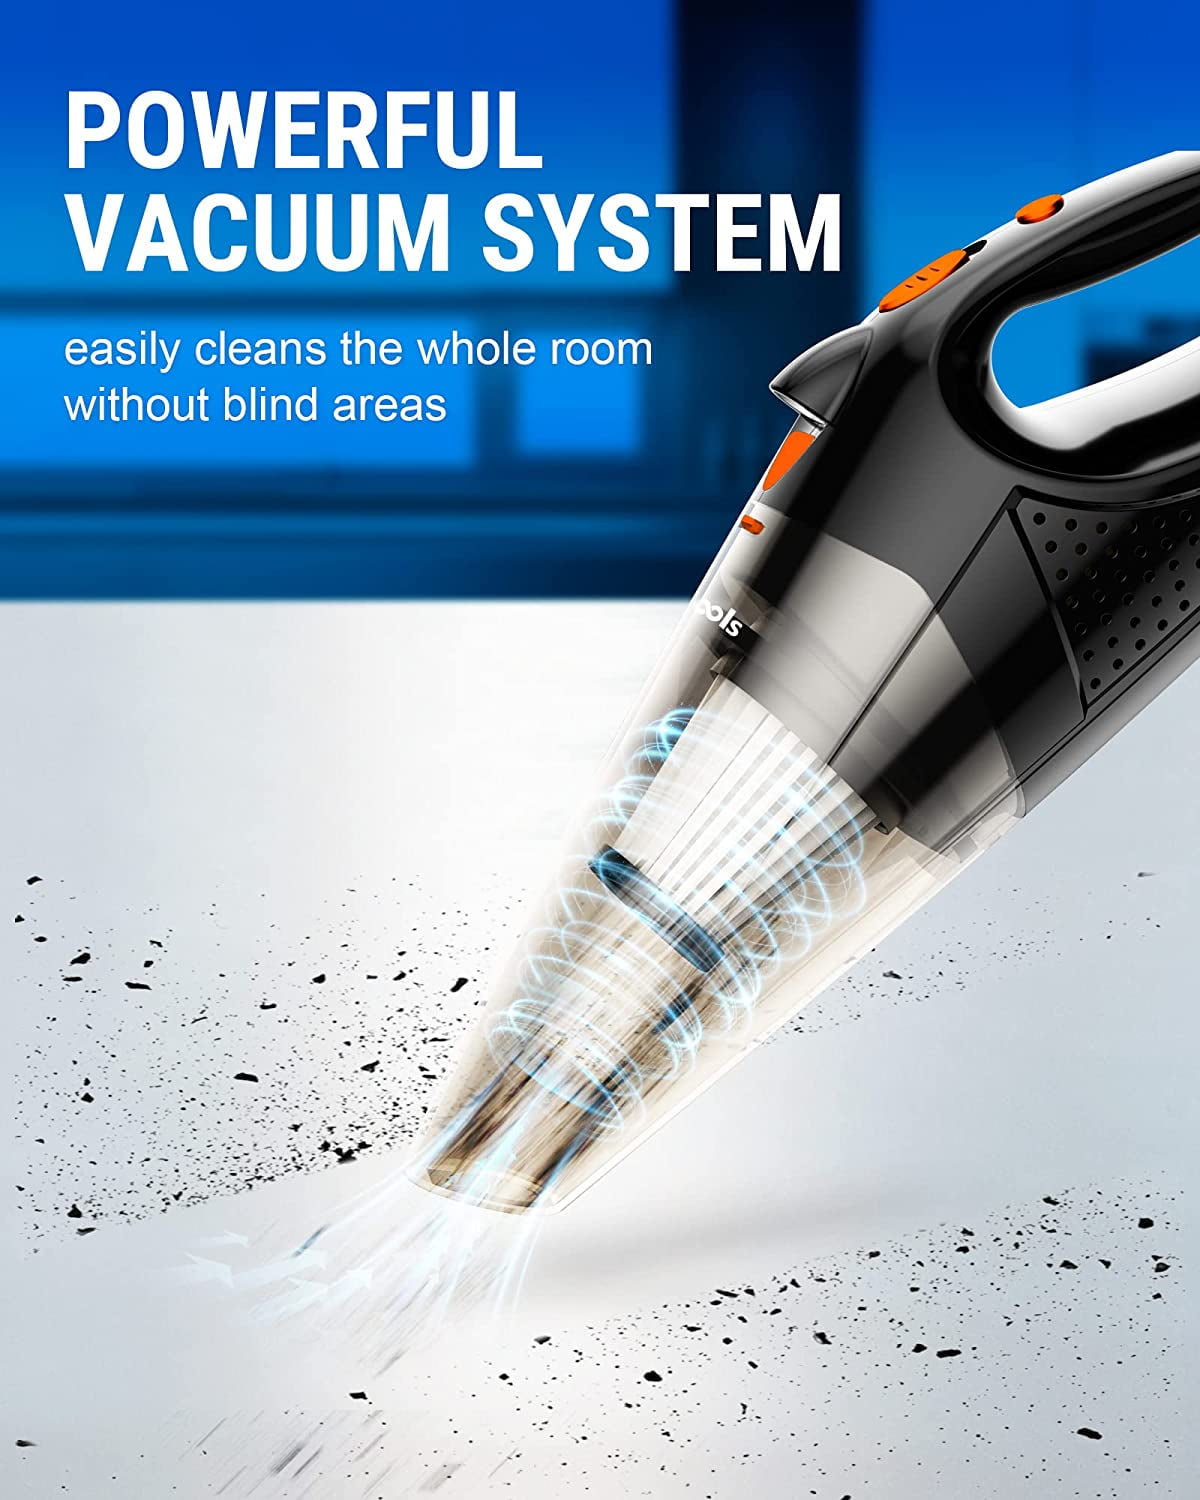 Powools Pet Hair Handheld Vacuum - Car Vacuum Cordless Rechargeable, W